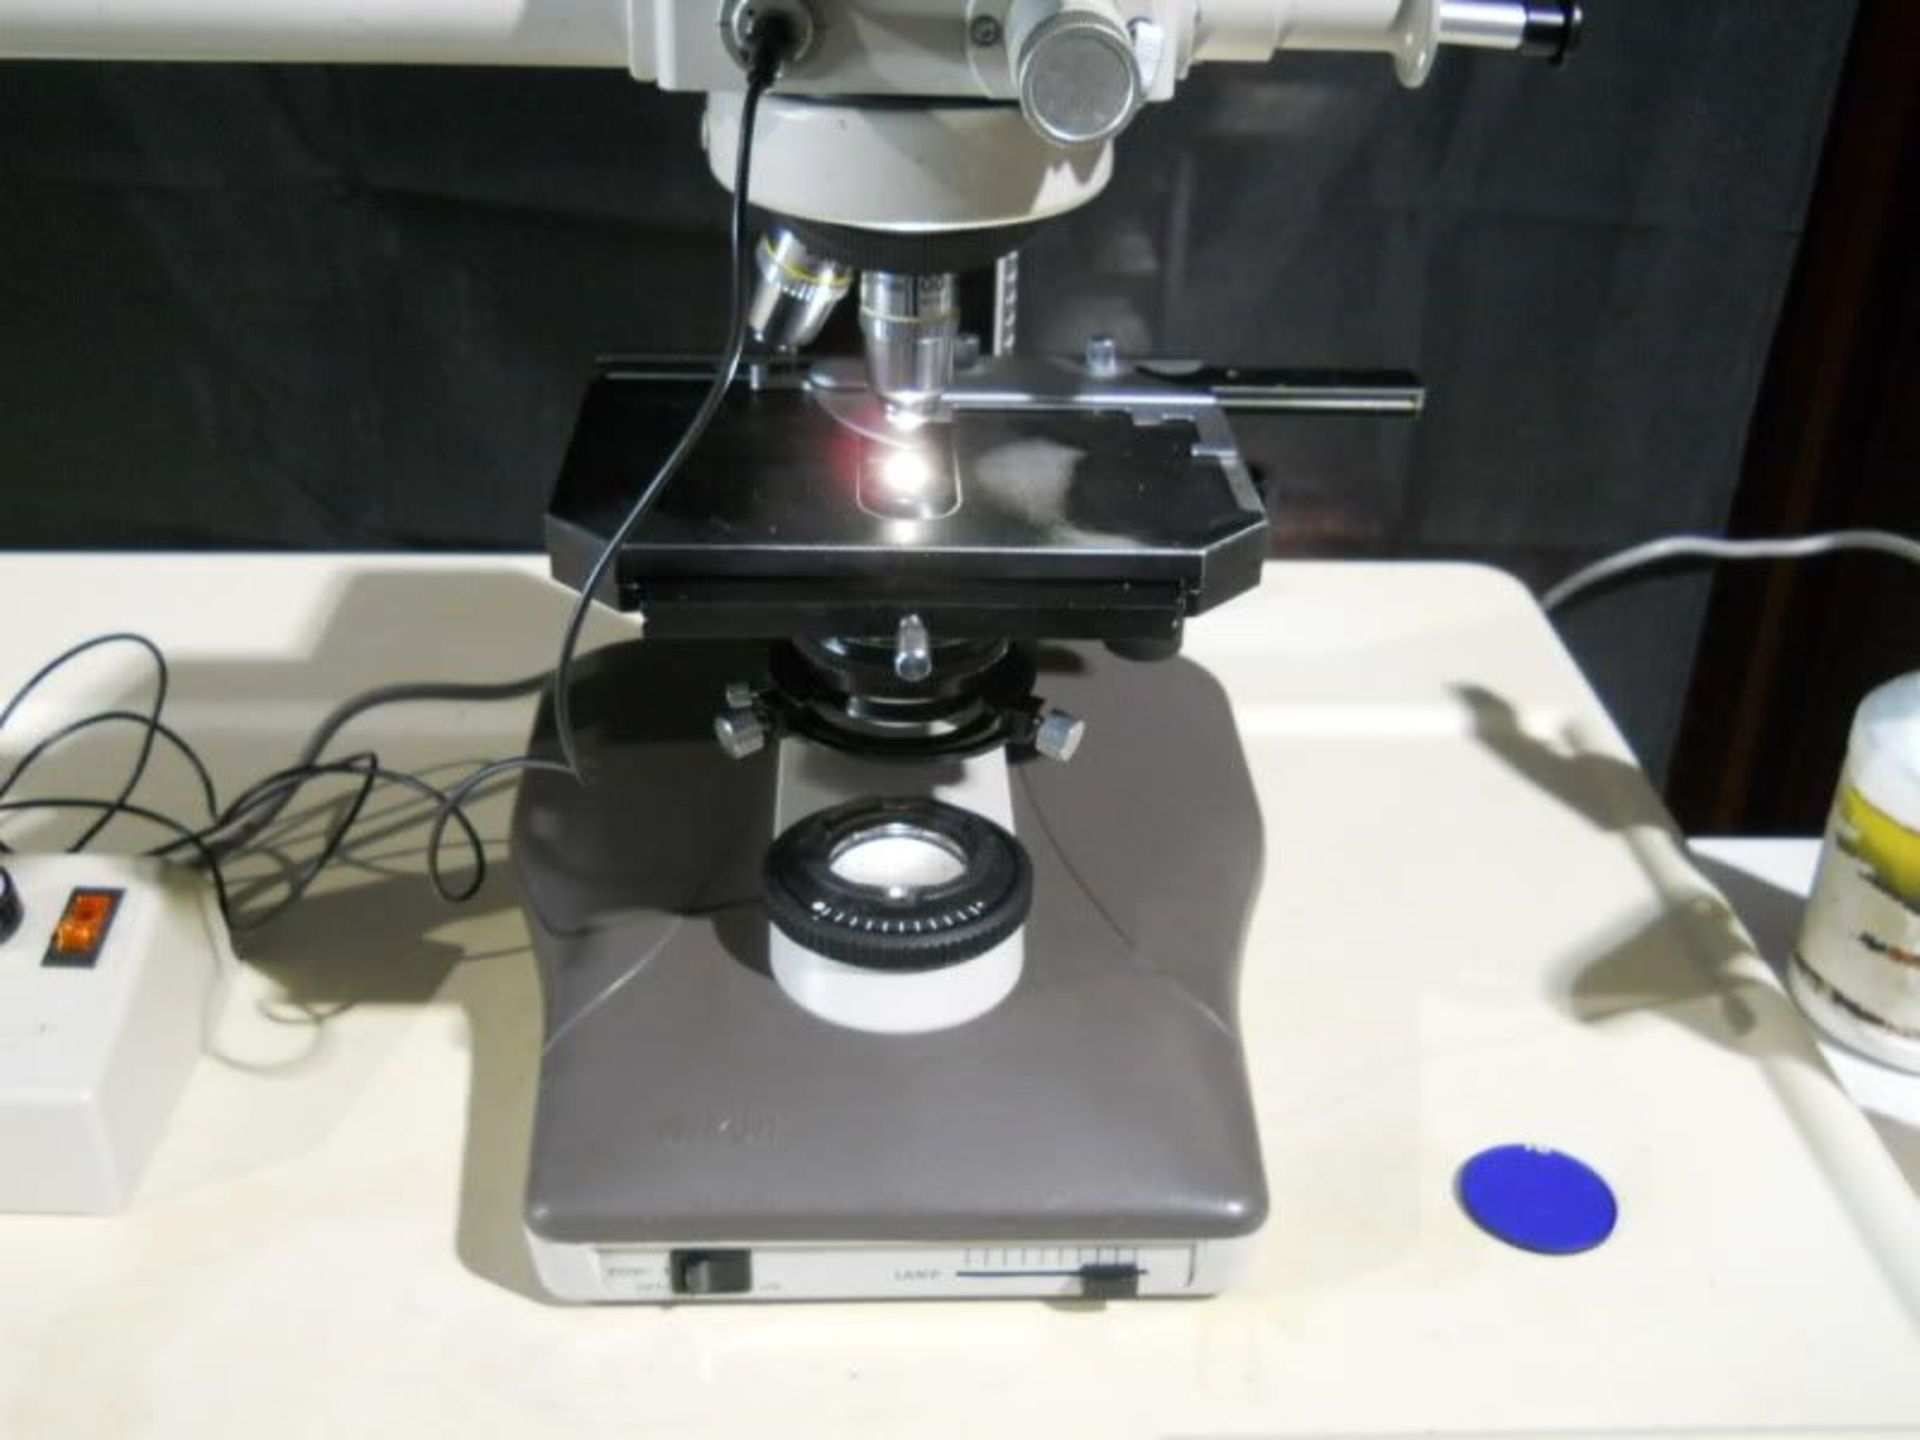 Nikon Labophot 2 Dual Viewing Teaching Microscope, Qty 1, 220748473340 - Image 2 of 10